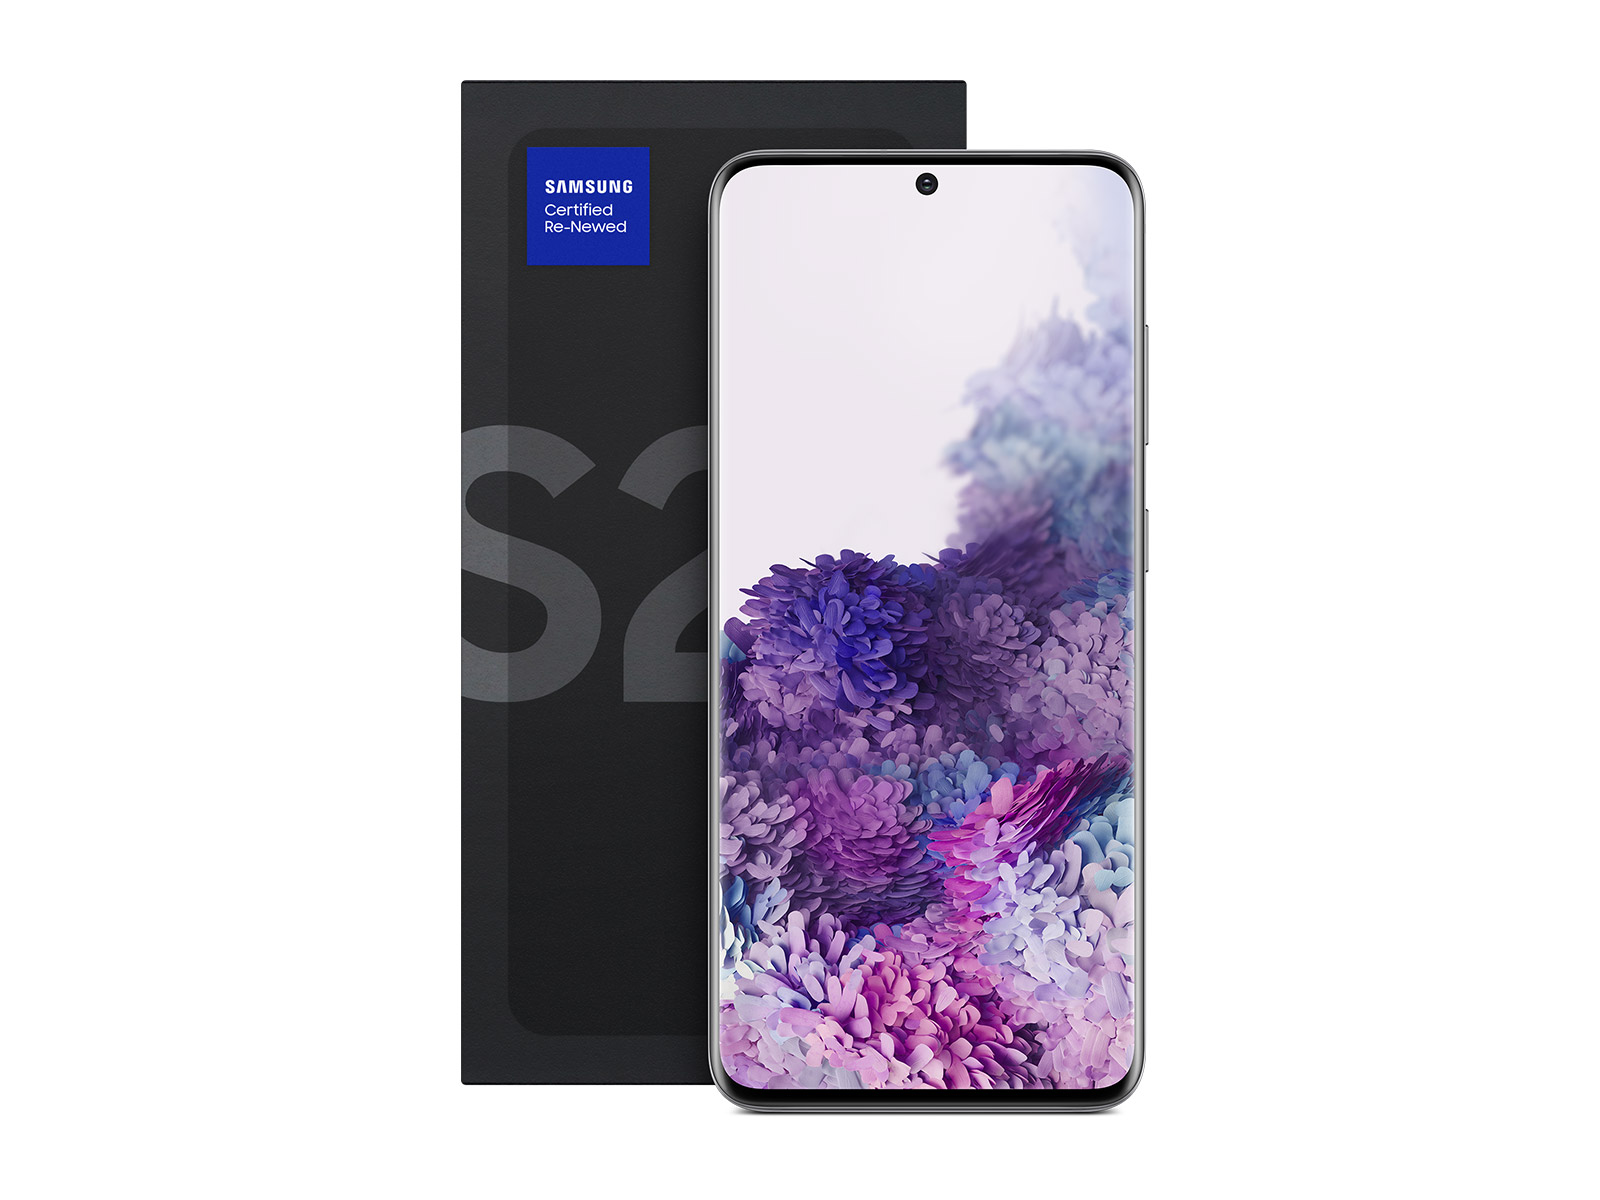 SM-G986U1 black 128 GB | Samsung US